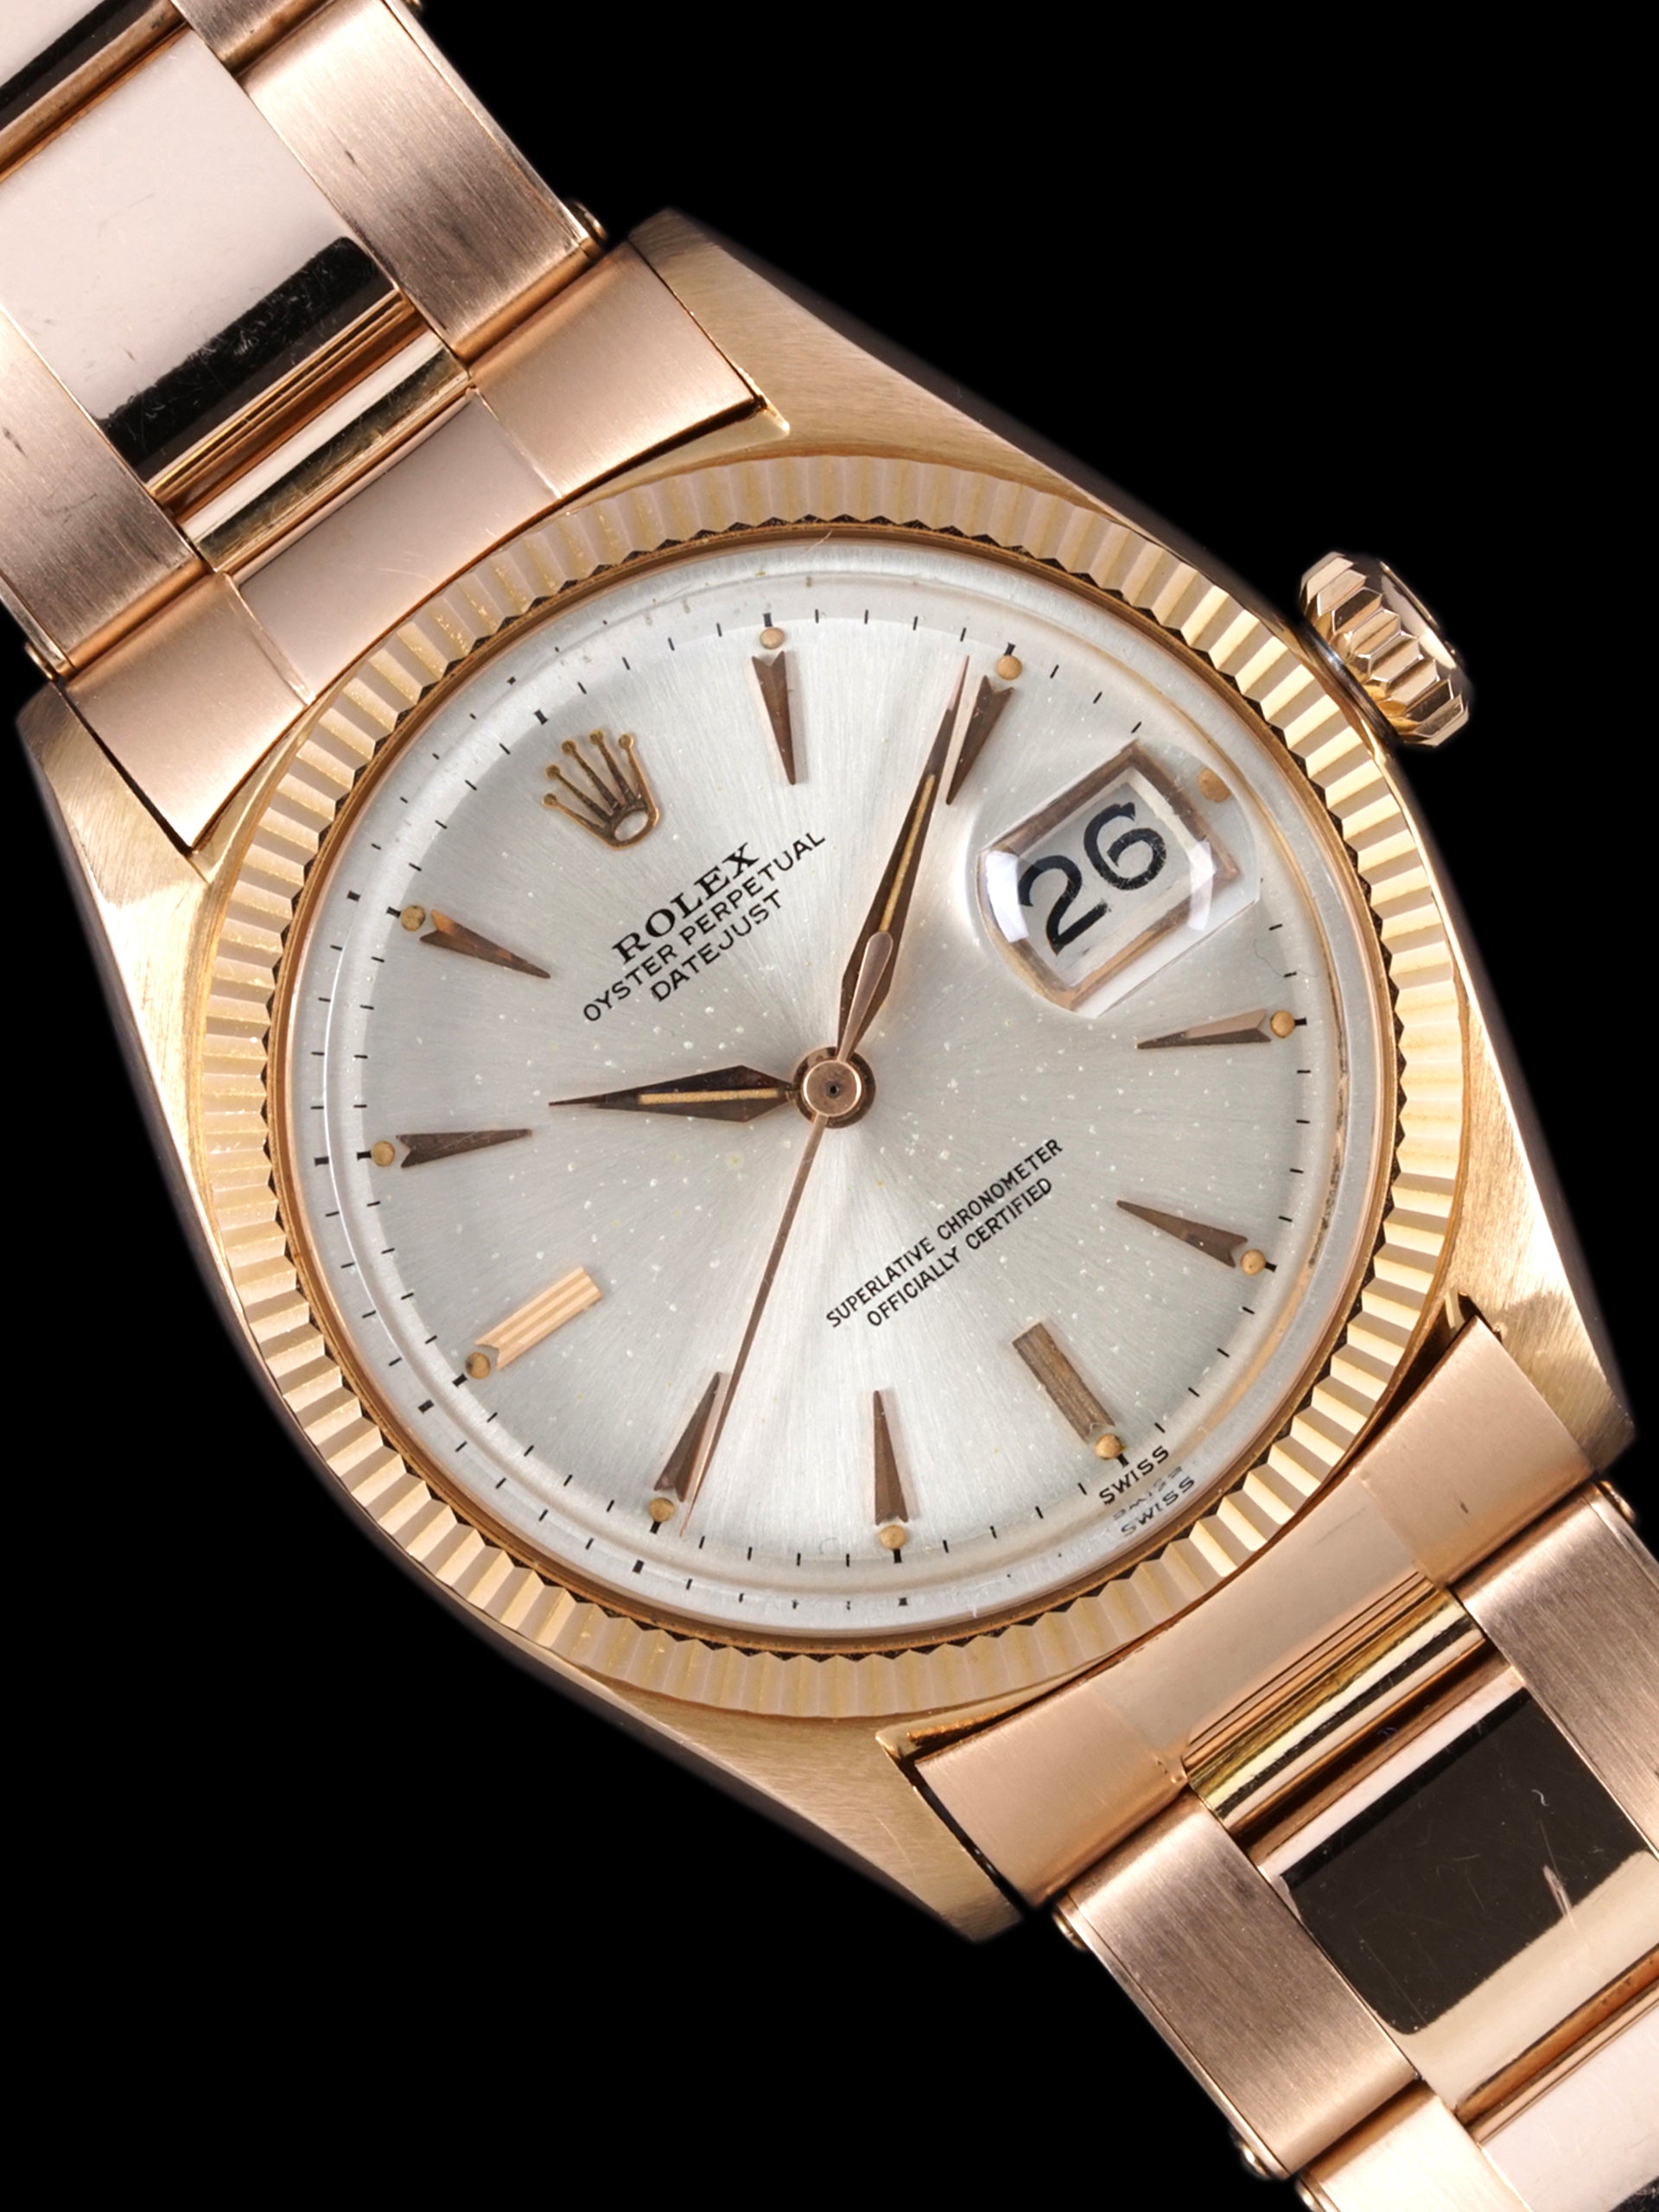 Rolex Datejust 1601 “Pink on Pink” Rose Gold Case, Bracelet and Dial